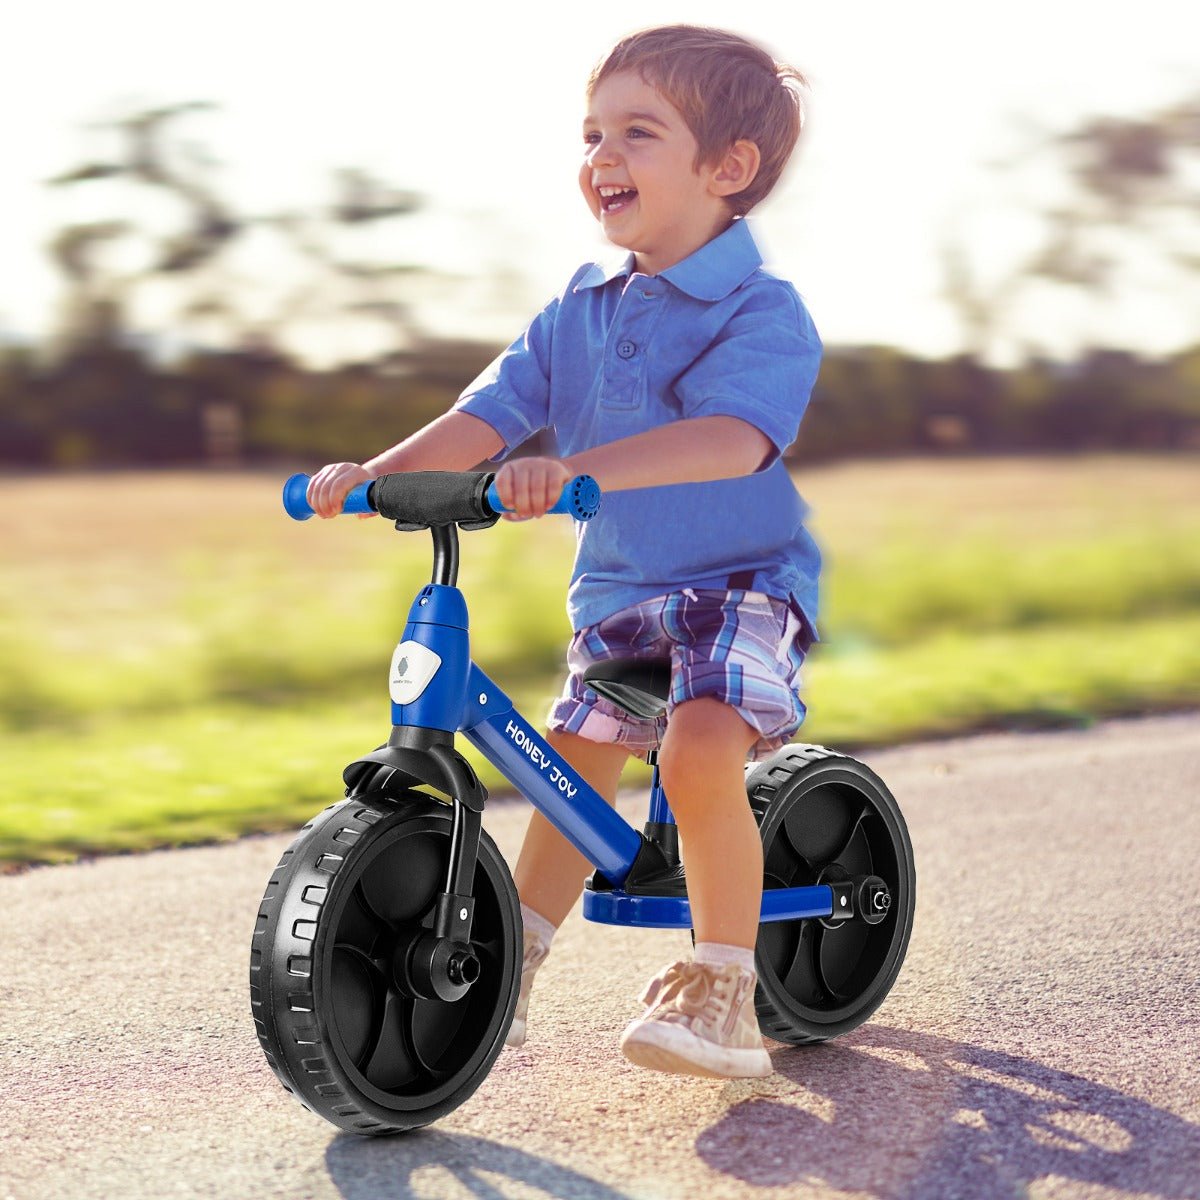 Training Wheels Adventure: 4-in-1 Kids Training Bike for Little Riders